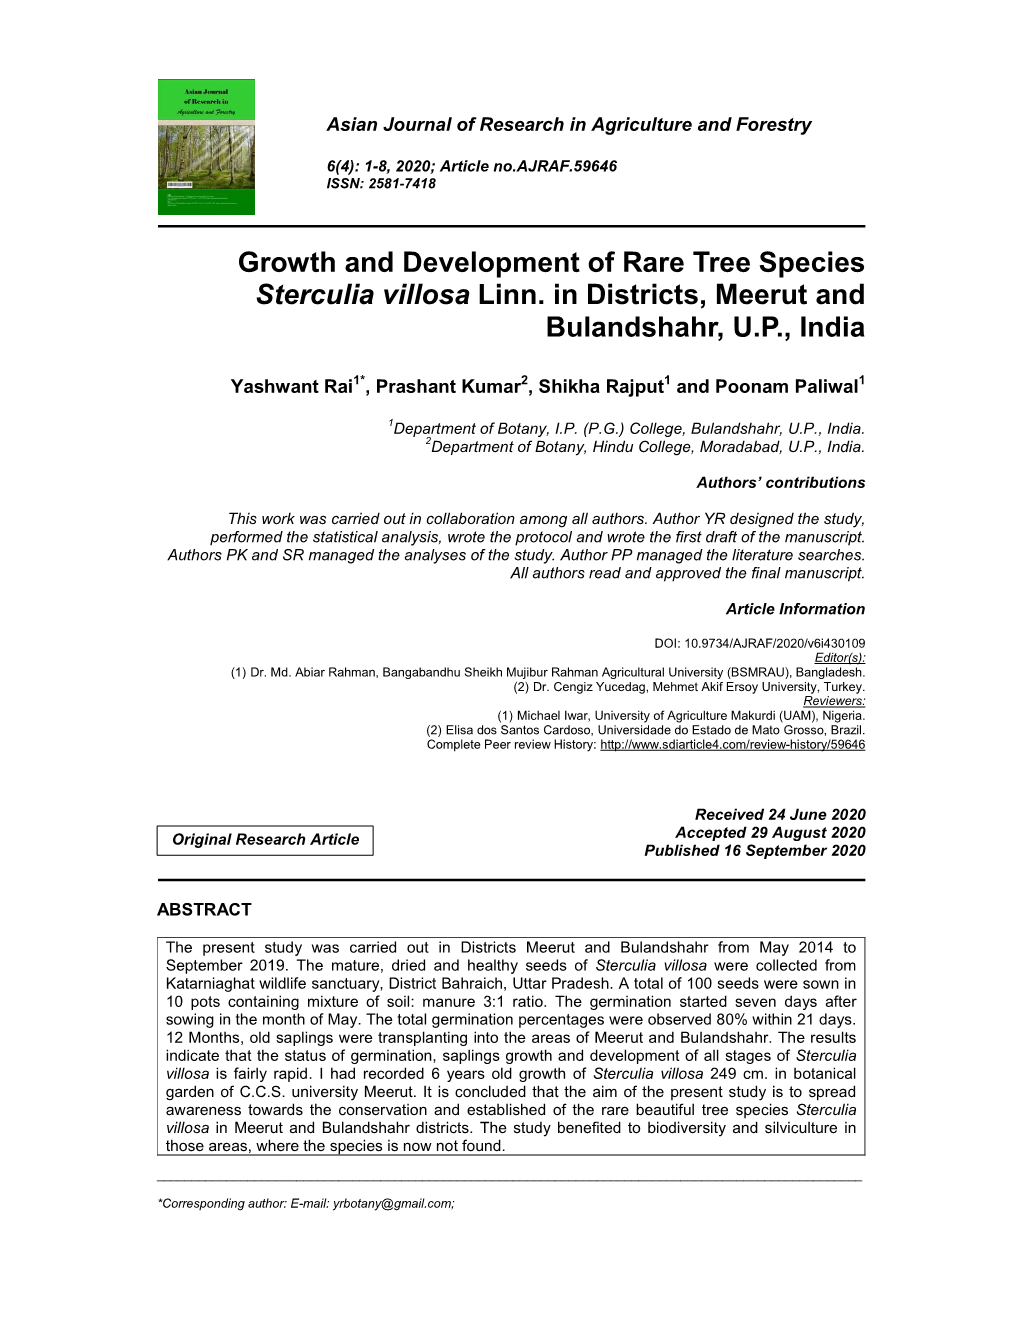 Growth and Development of Rare Tree Species Sterculia Villosa Linn